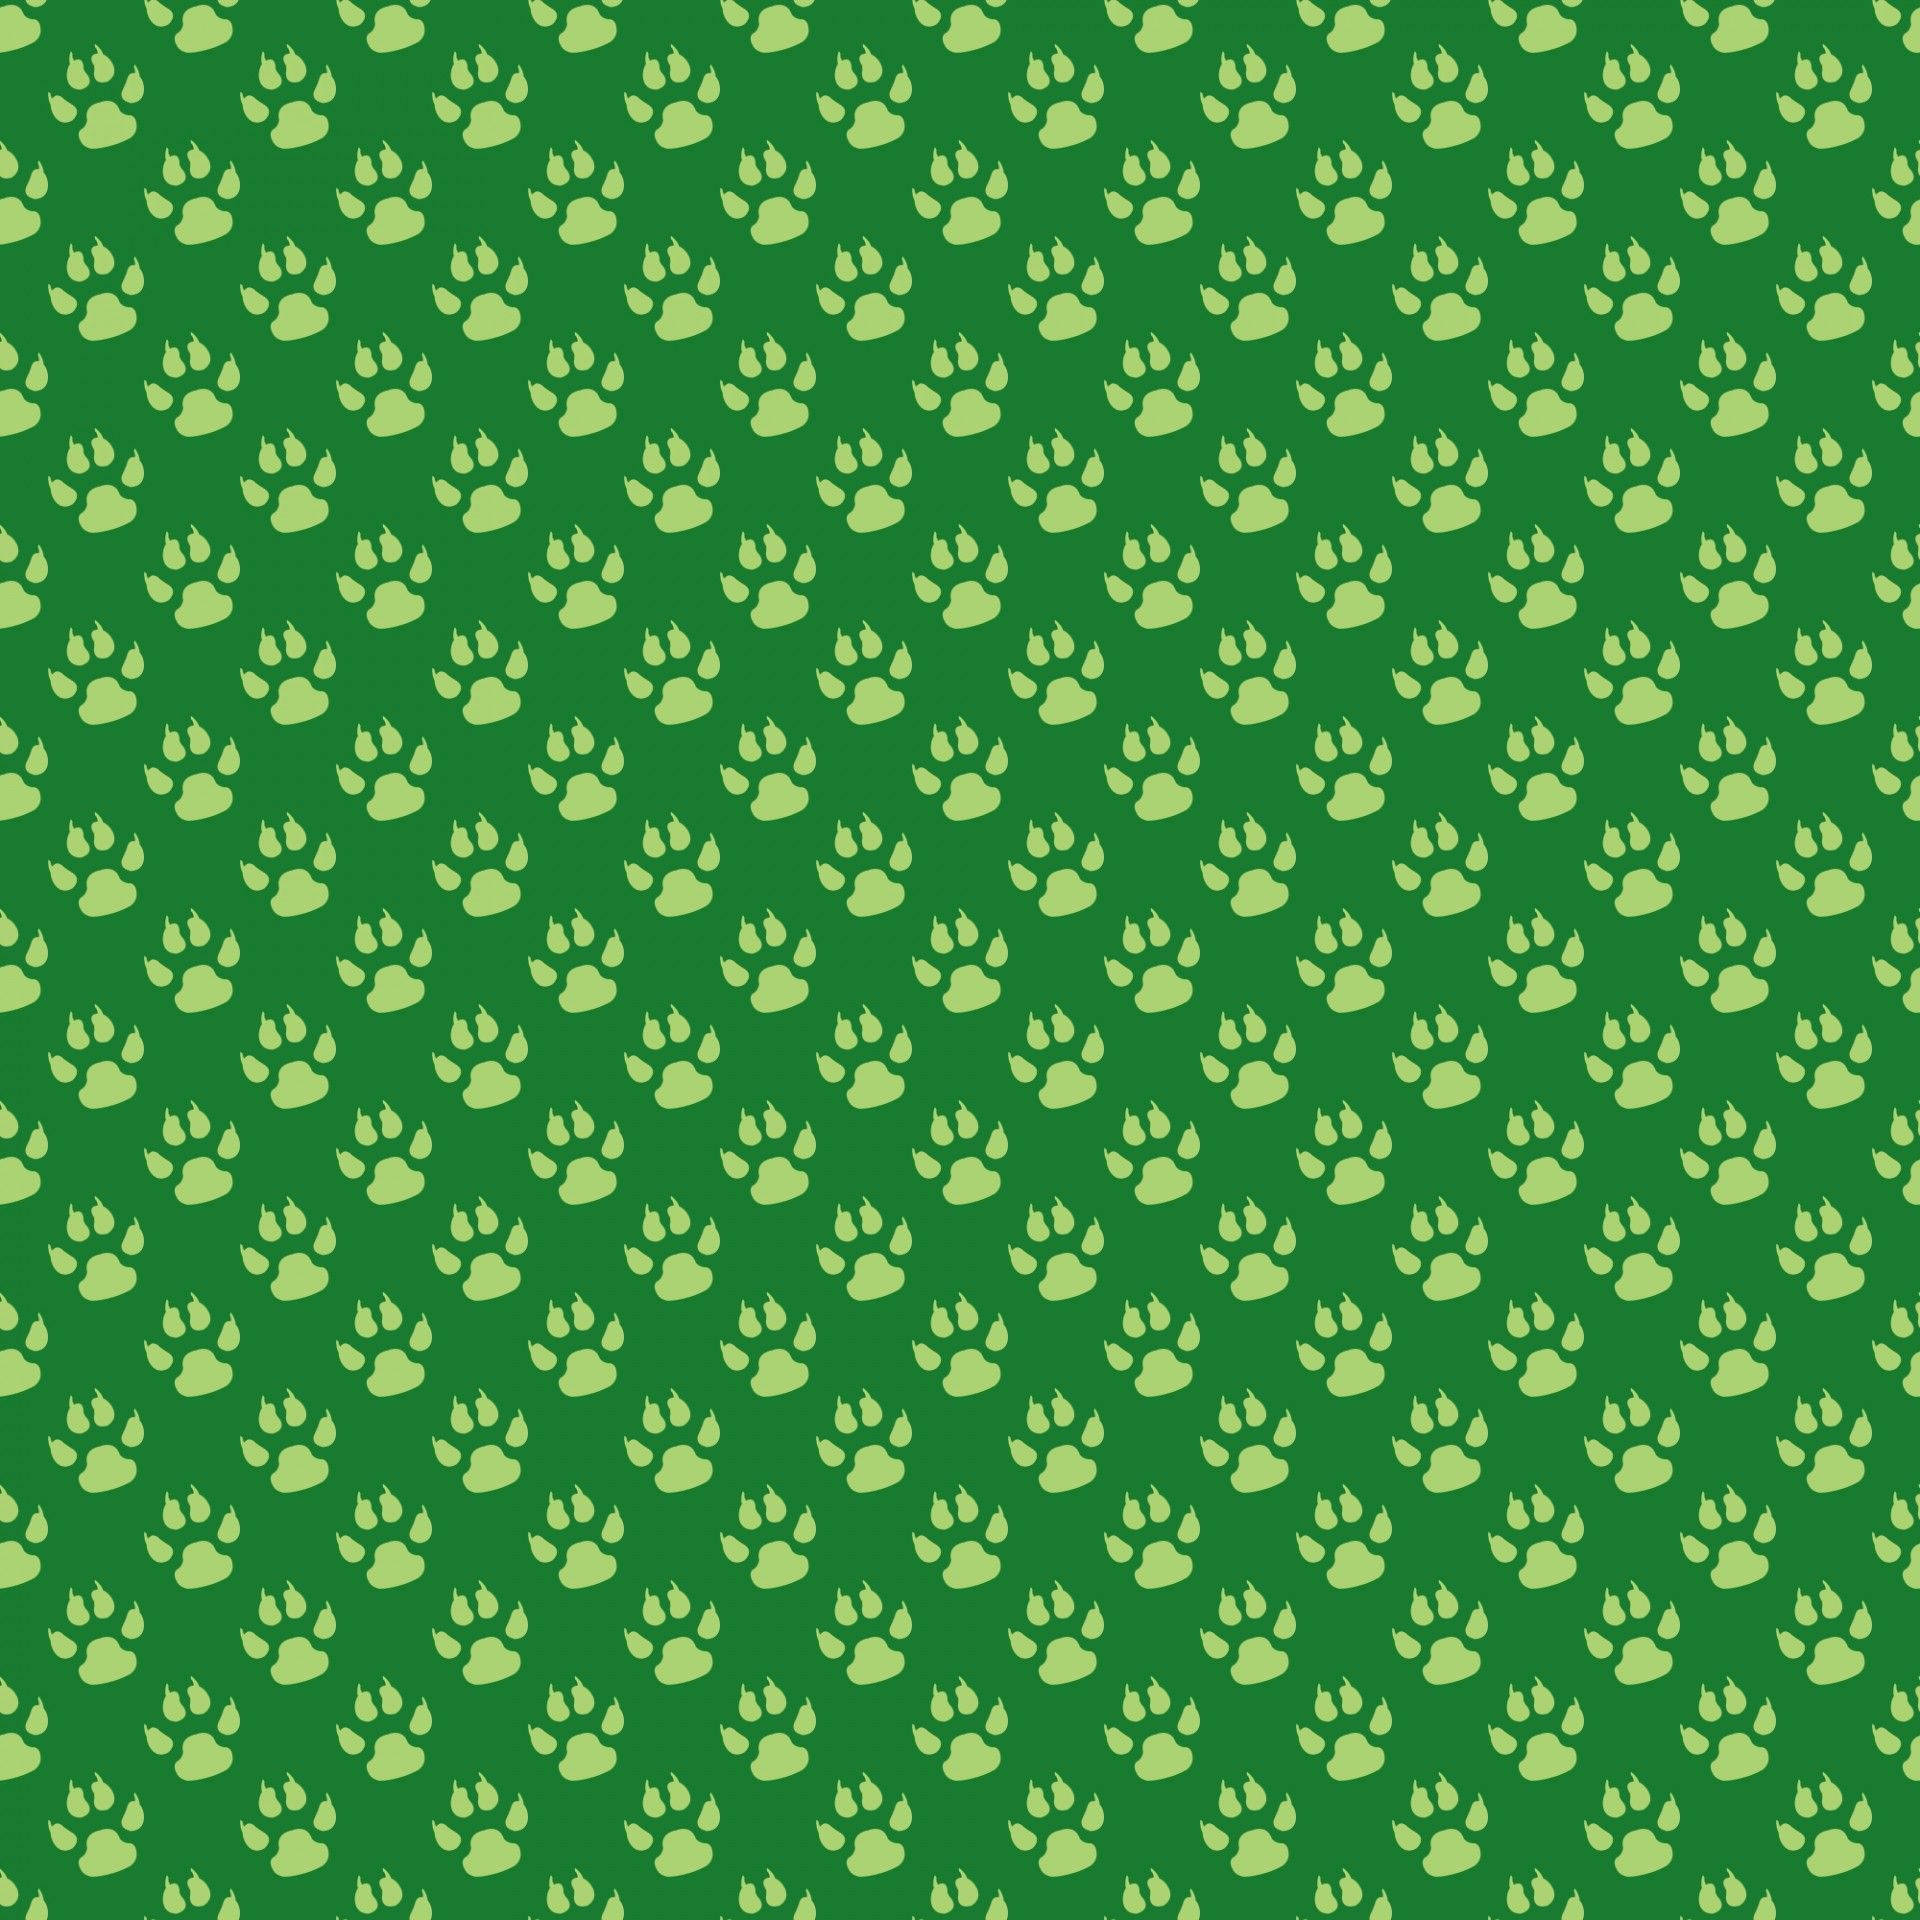 Green Paw Prints Background